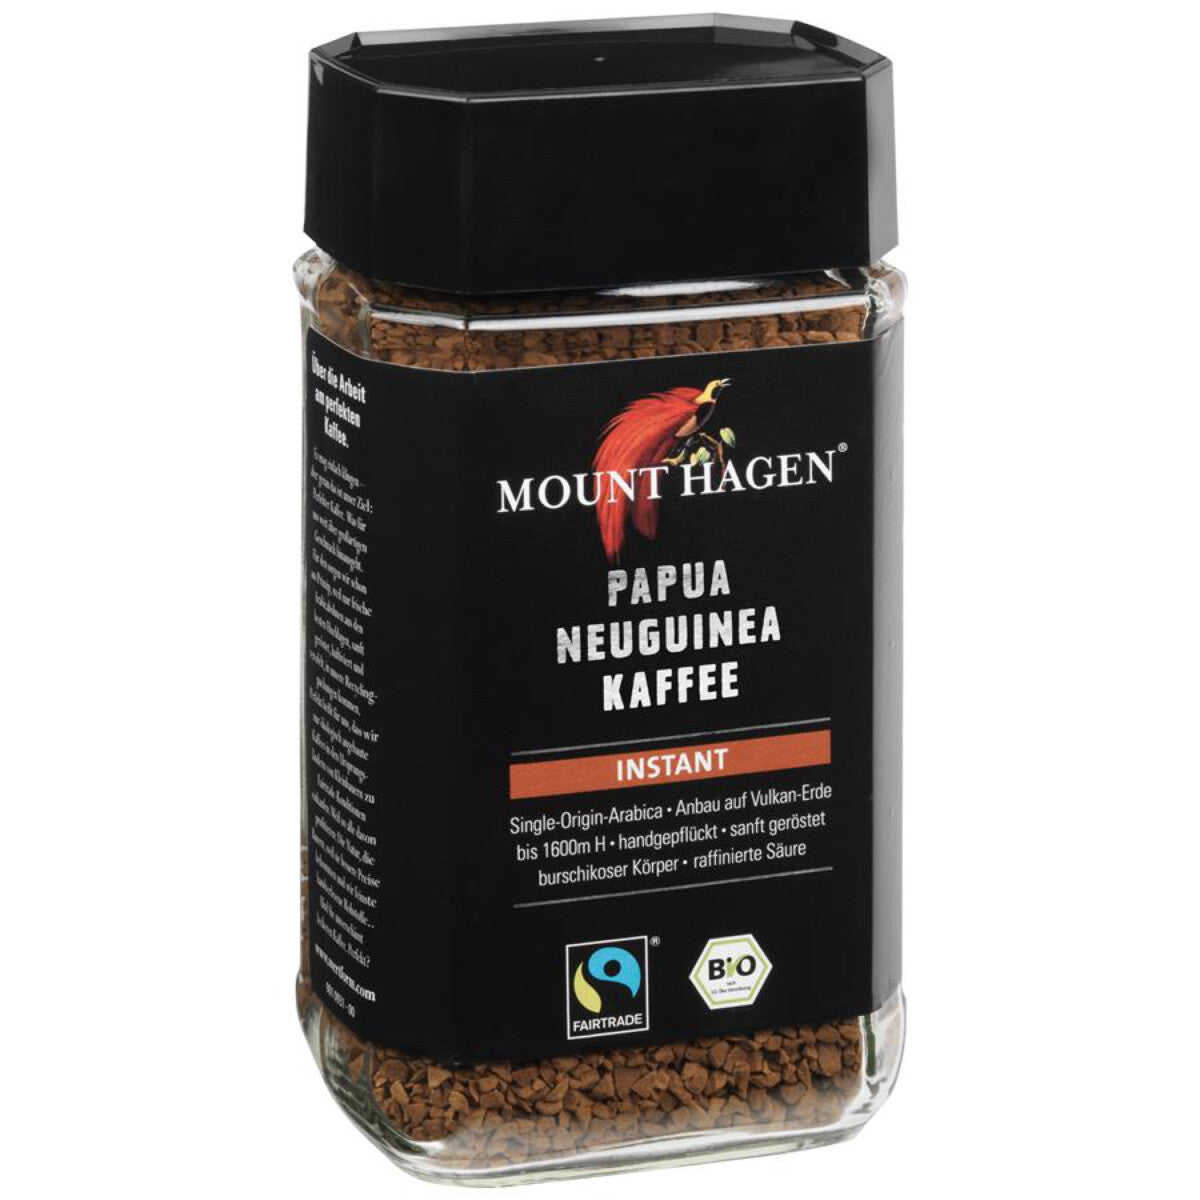 MOUNT HAGEN Papua Neuguinea Kaffee Instant - 100 g